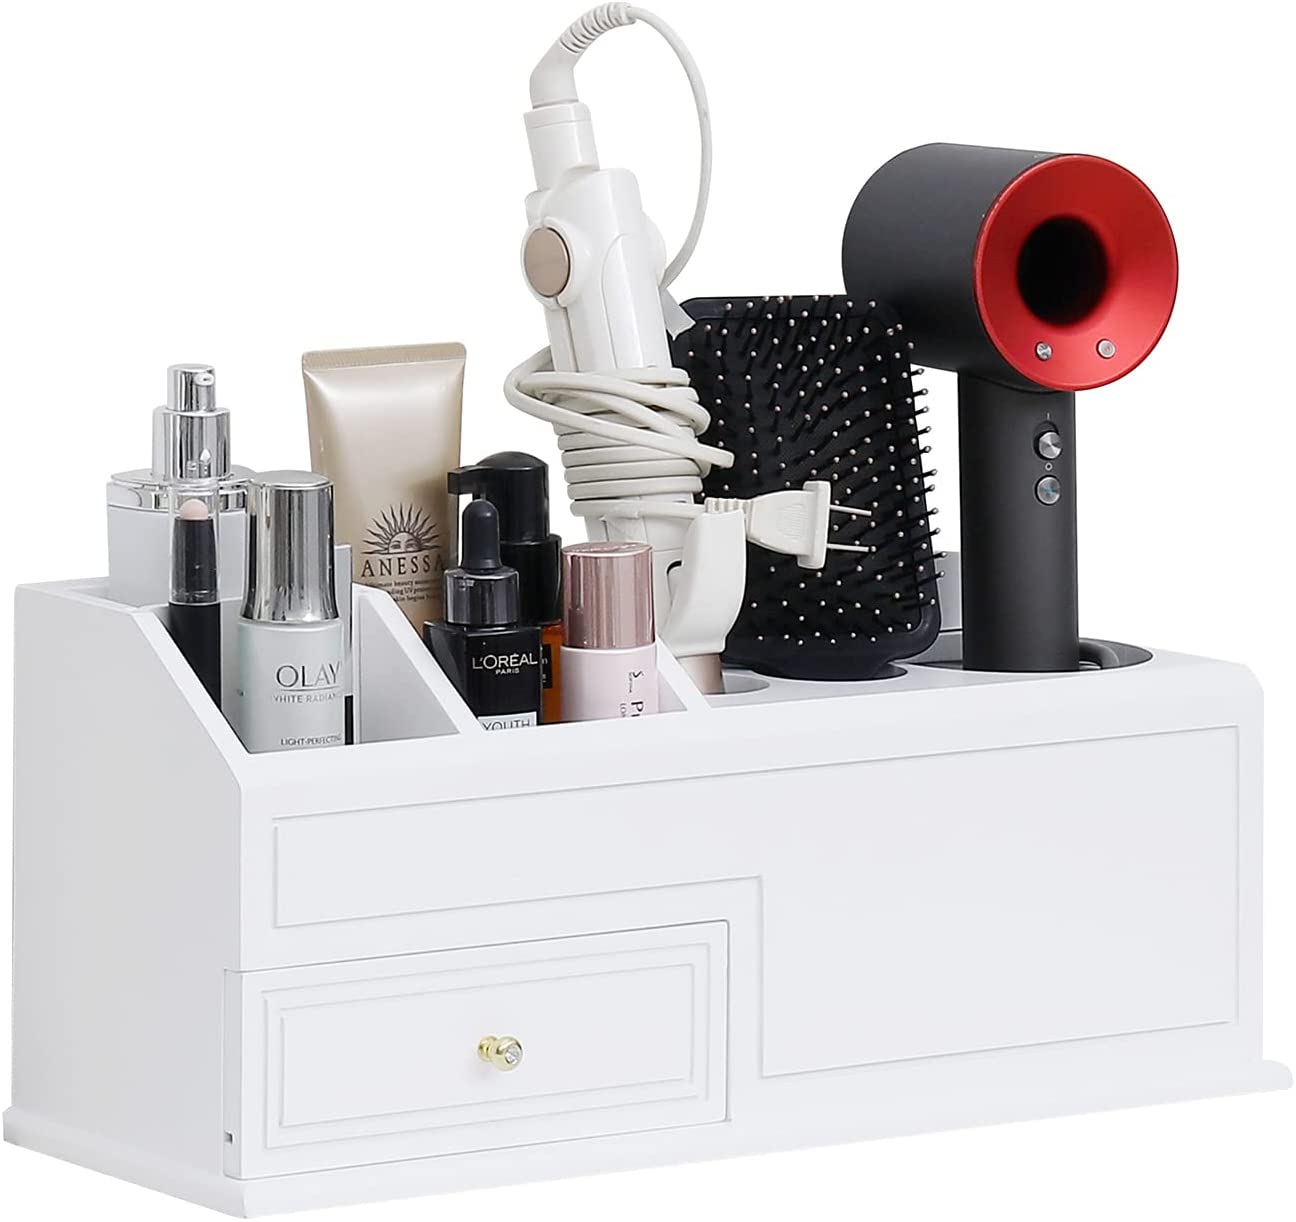 WELLAND Bathroom Organizer Desktop Storage Include Hair Dryer Rack wit -  Welland Store